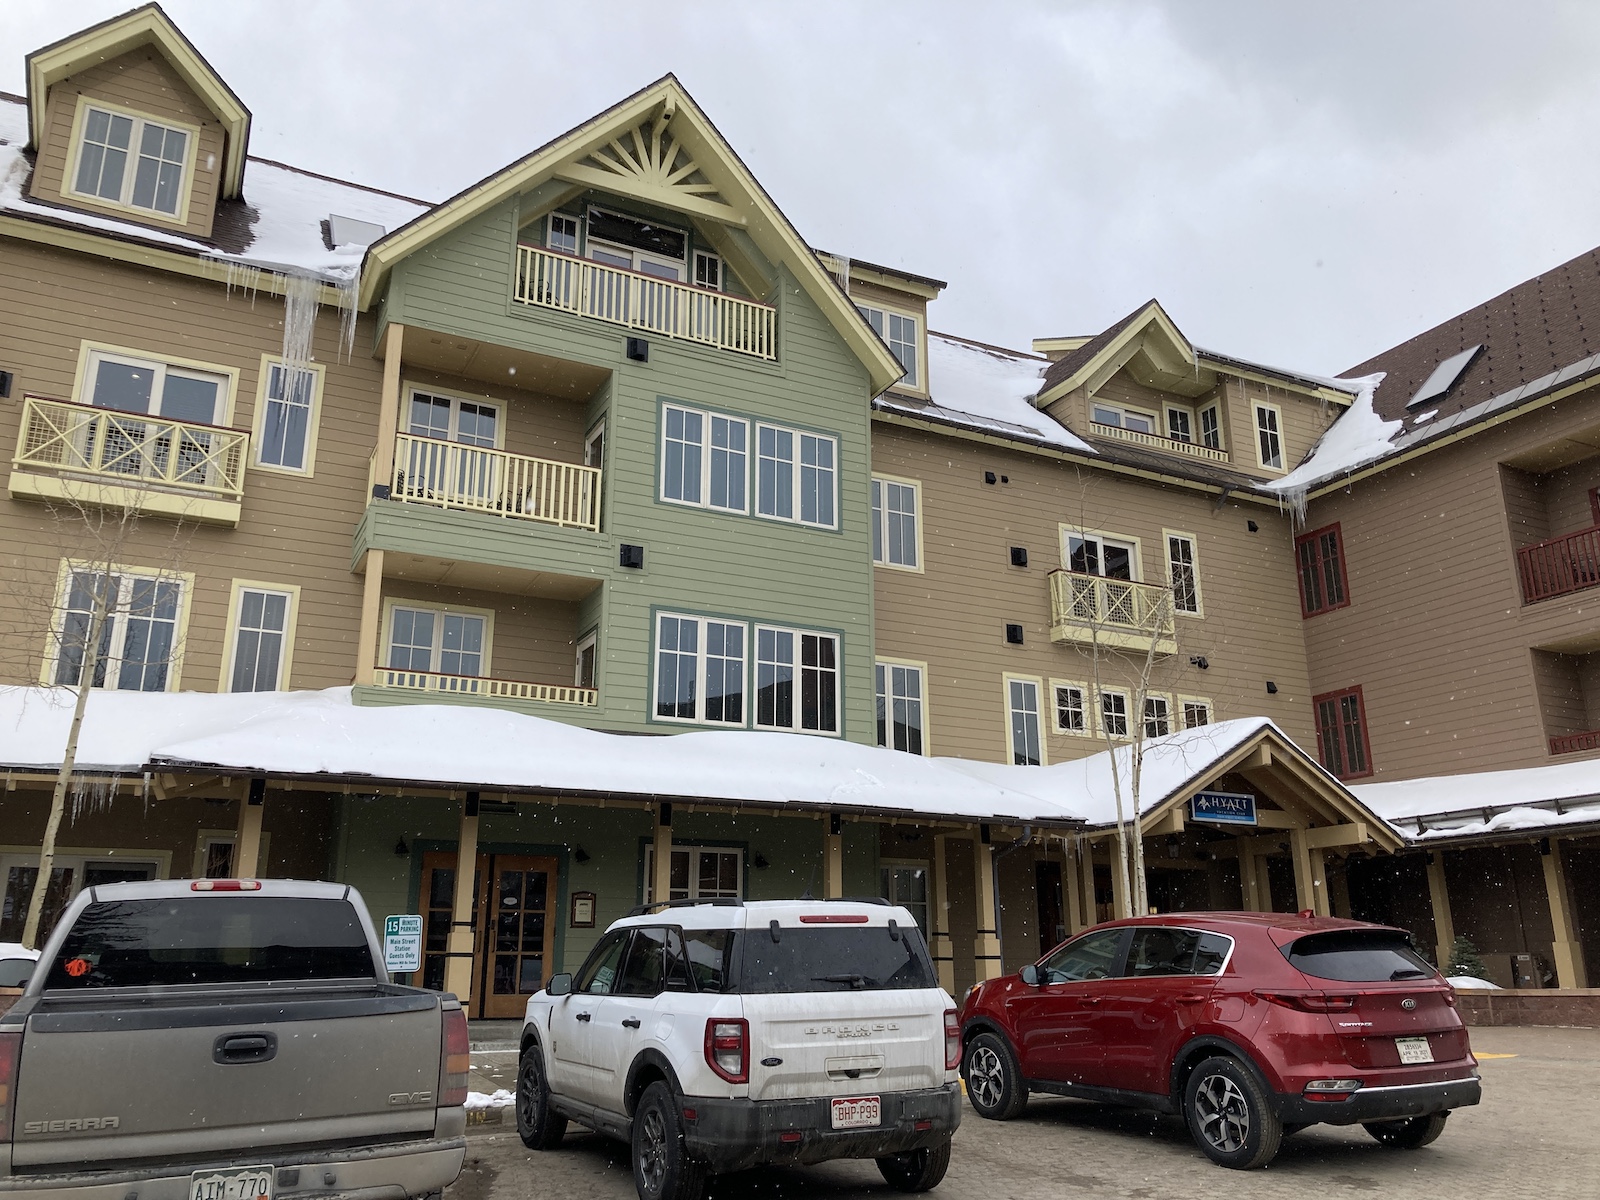 Hyatt Residence Club Breckenridge Review - Ski Resort Meets Apartments